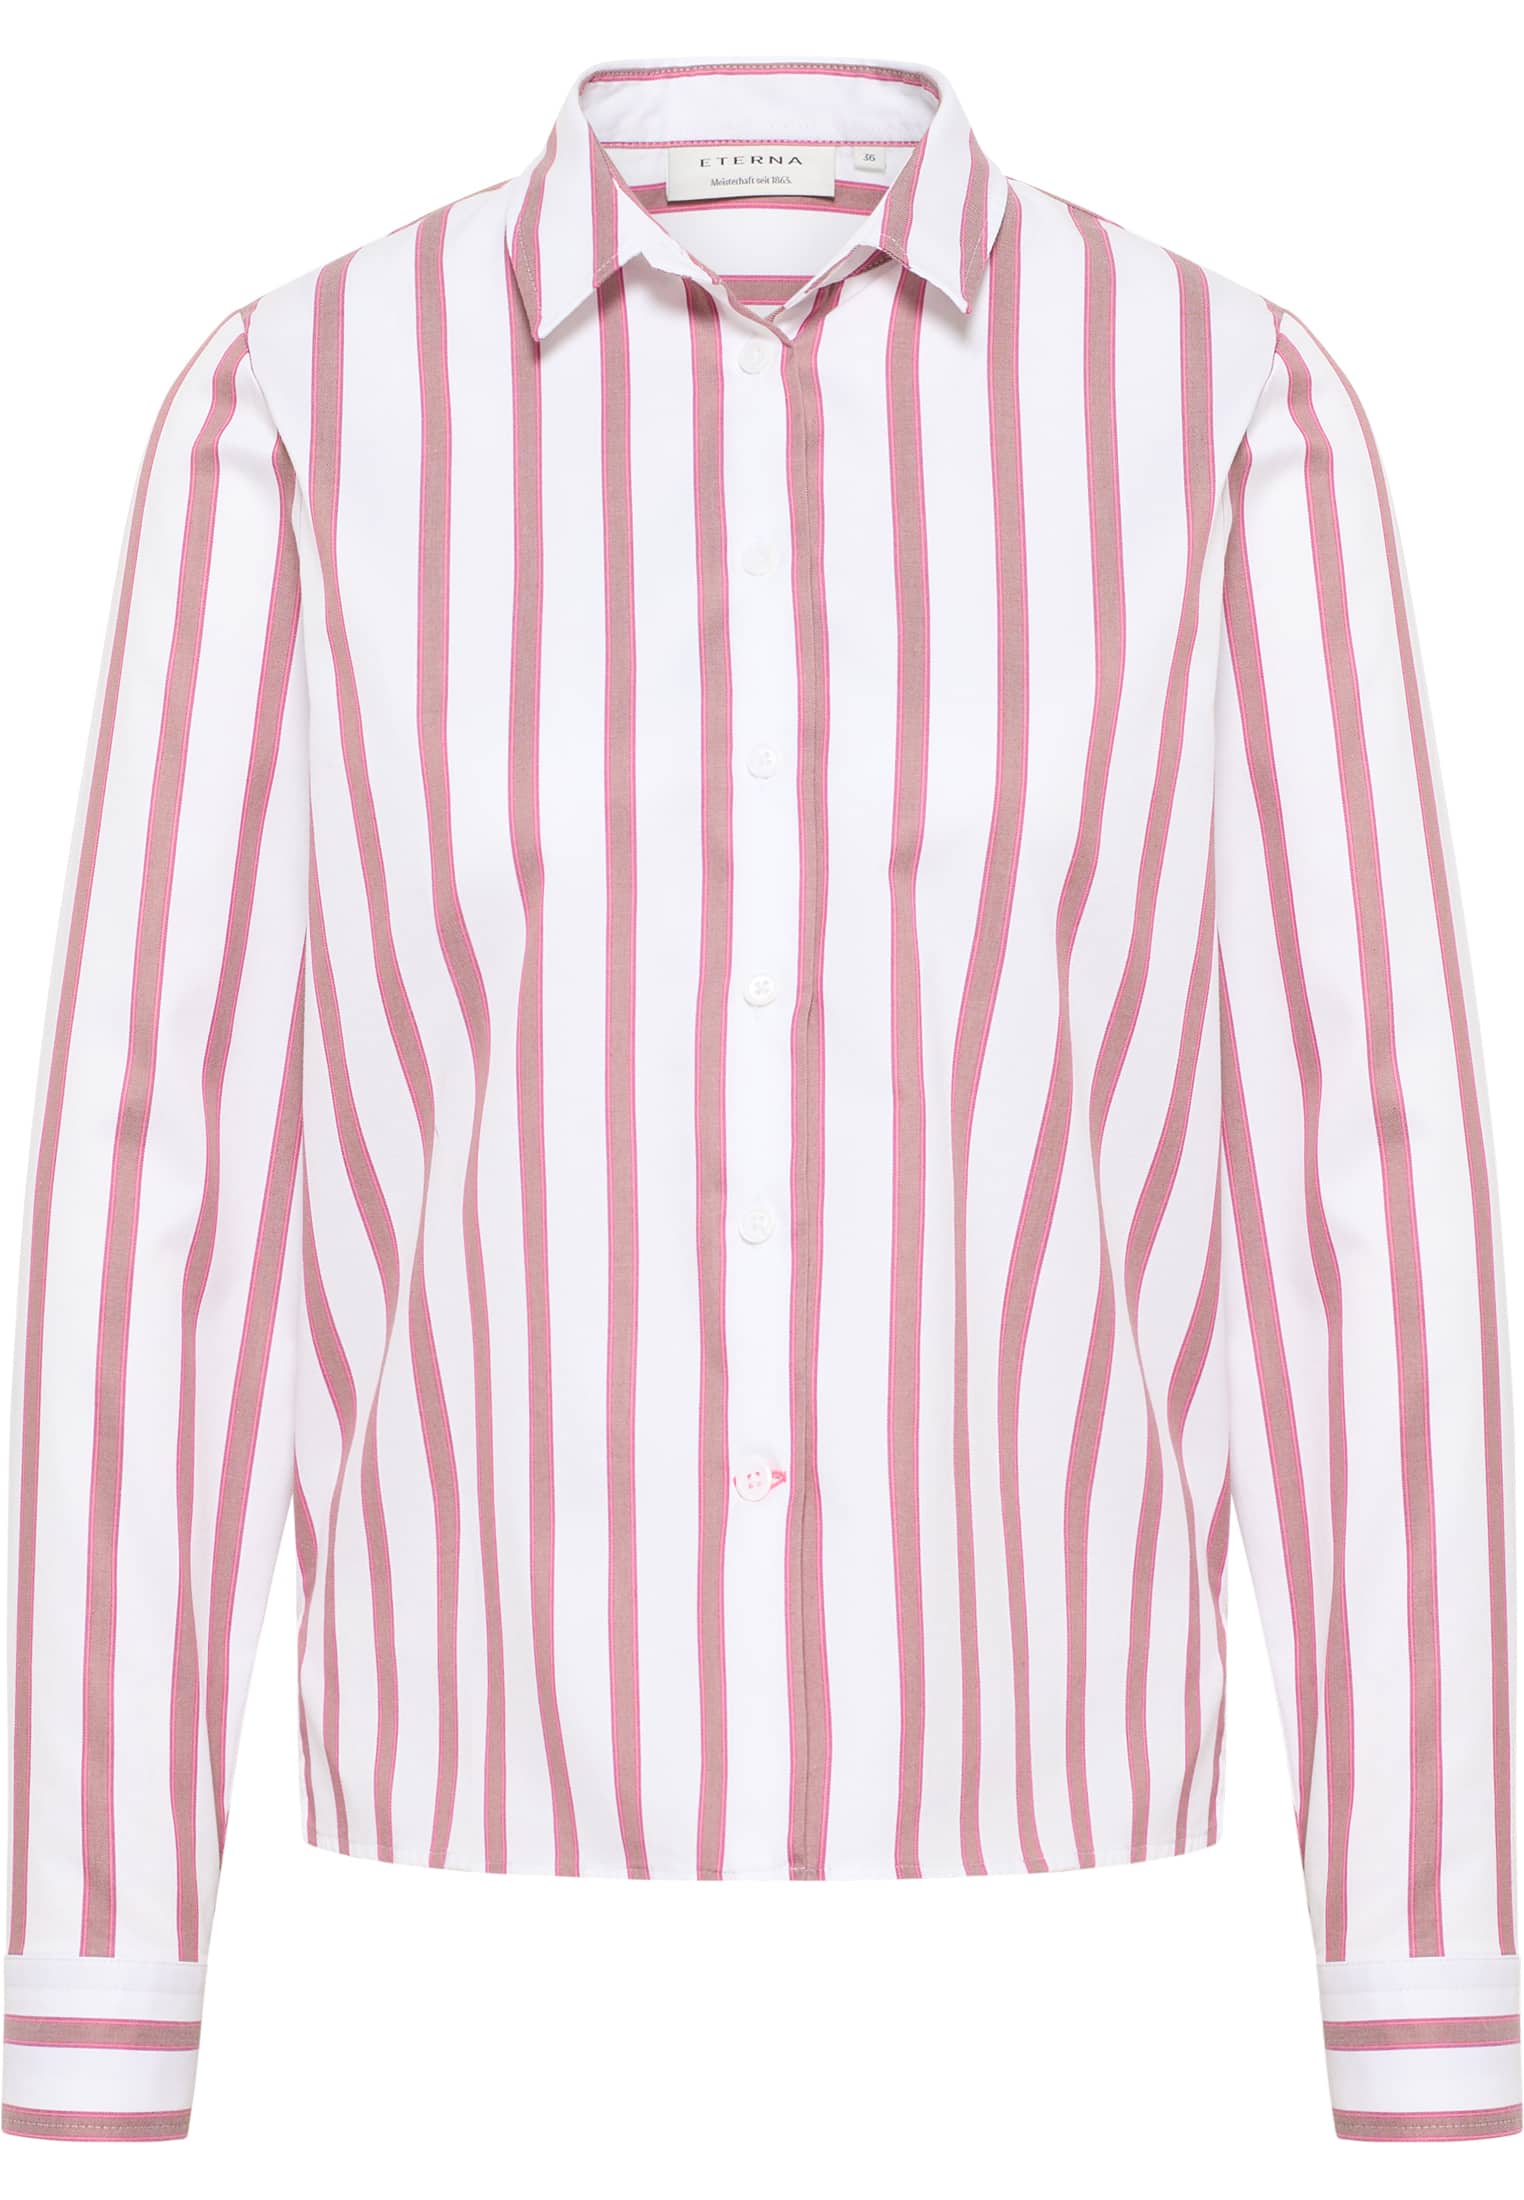 Luxury gestreift 46 in | pink Soft Shirt Bluse | 2BL04213-15-21-46-1/1 | Langarm pink |